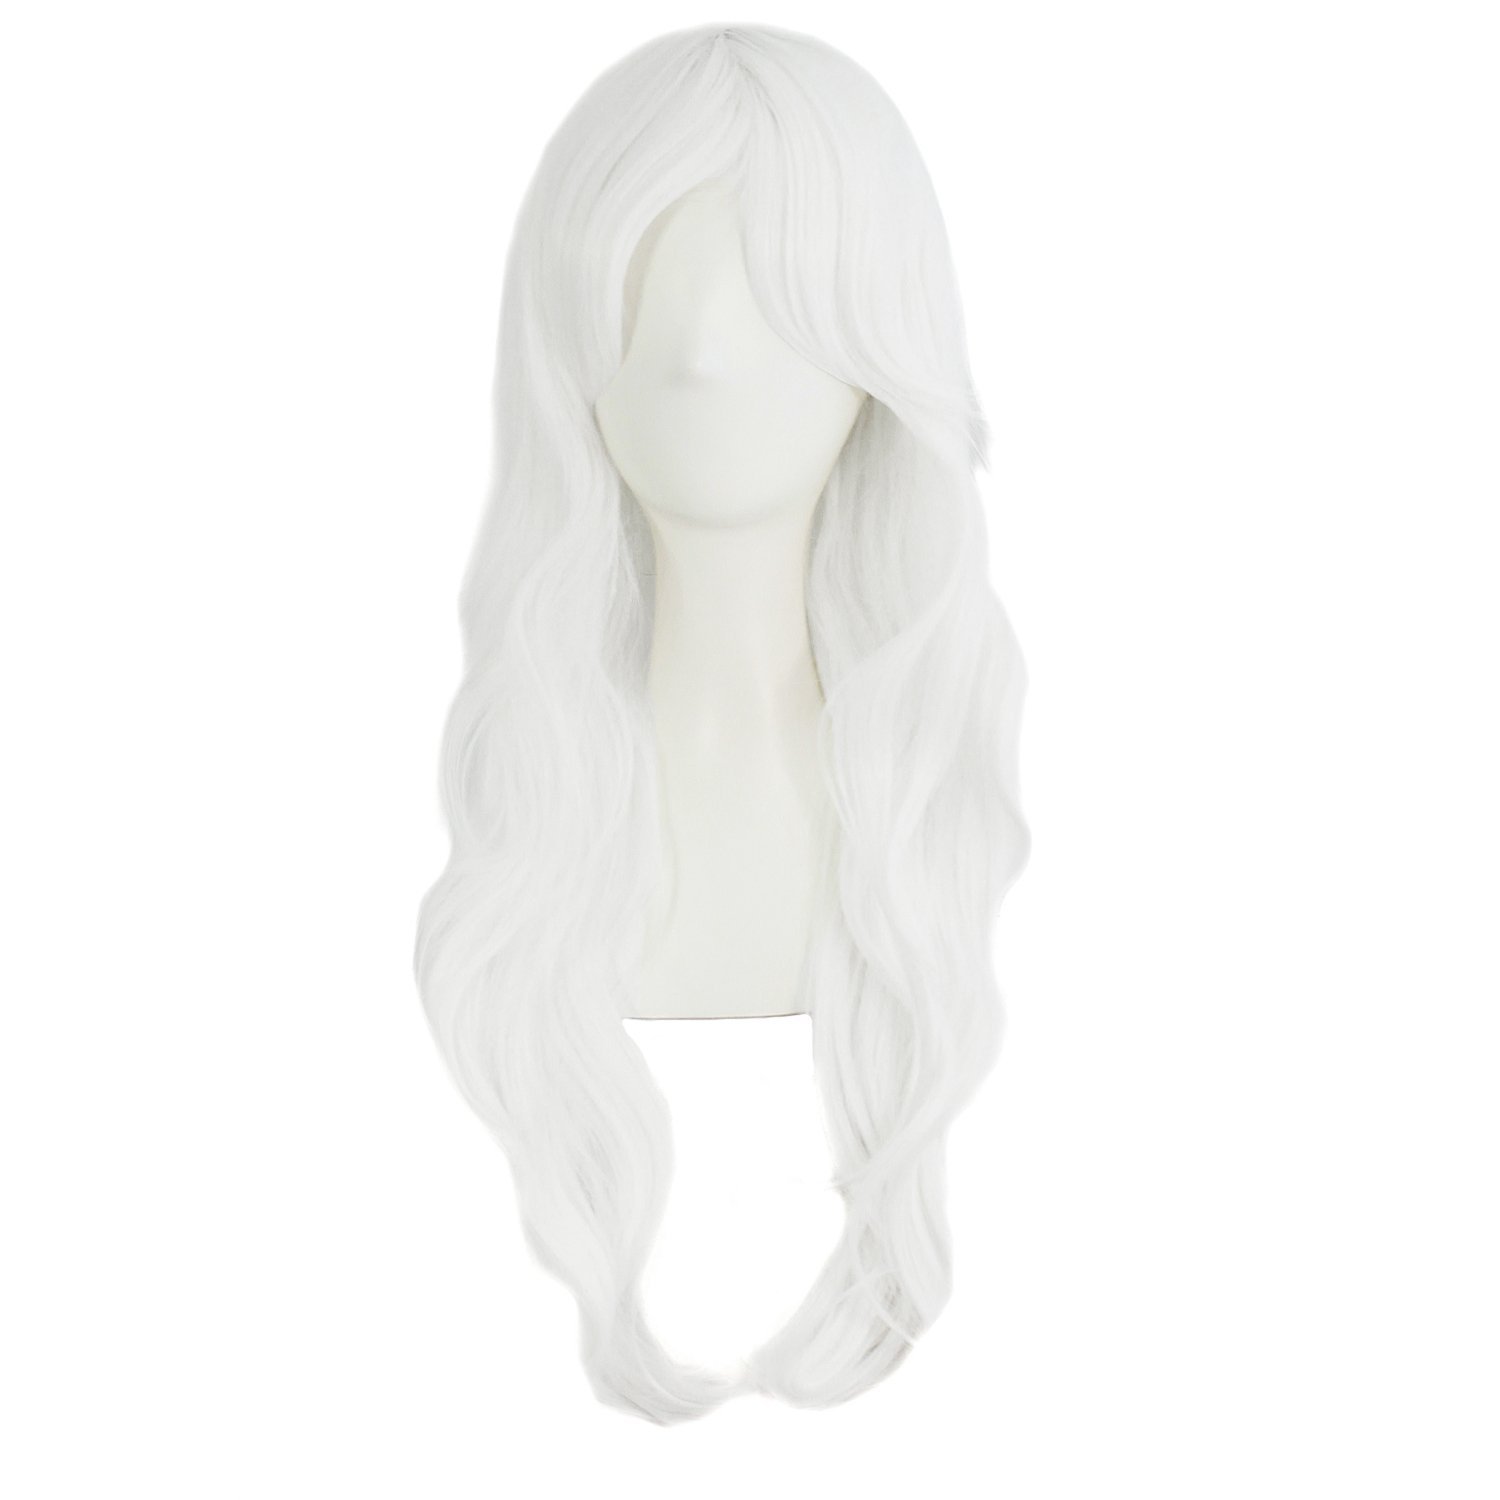 long-white-wig